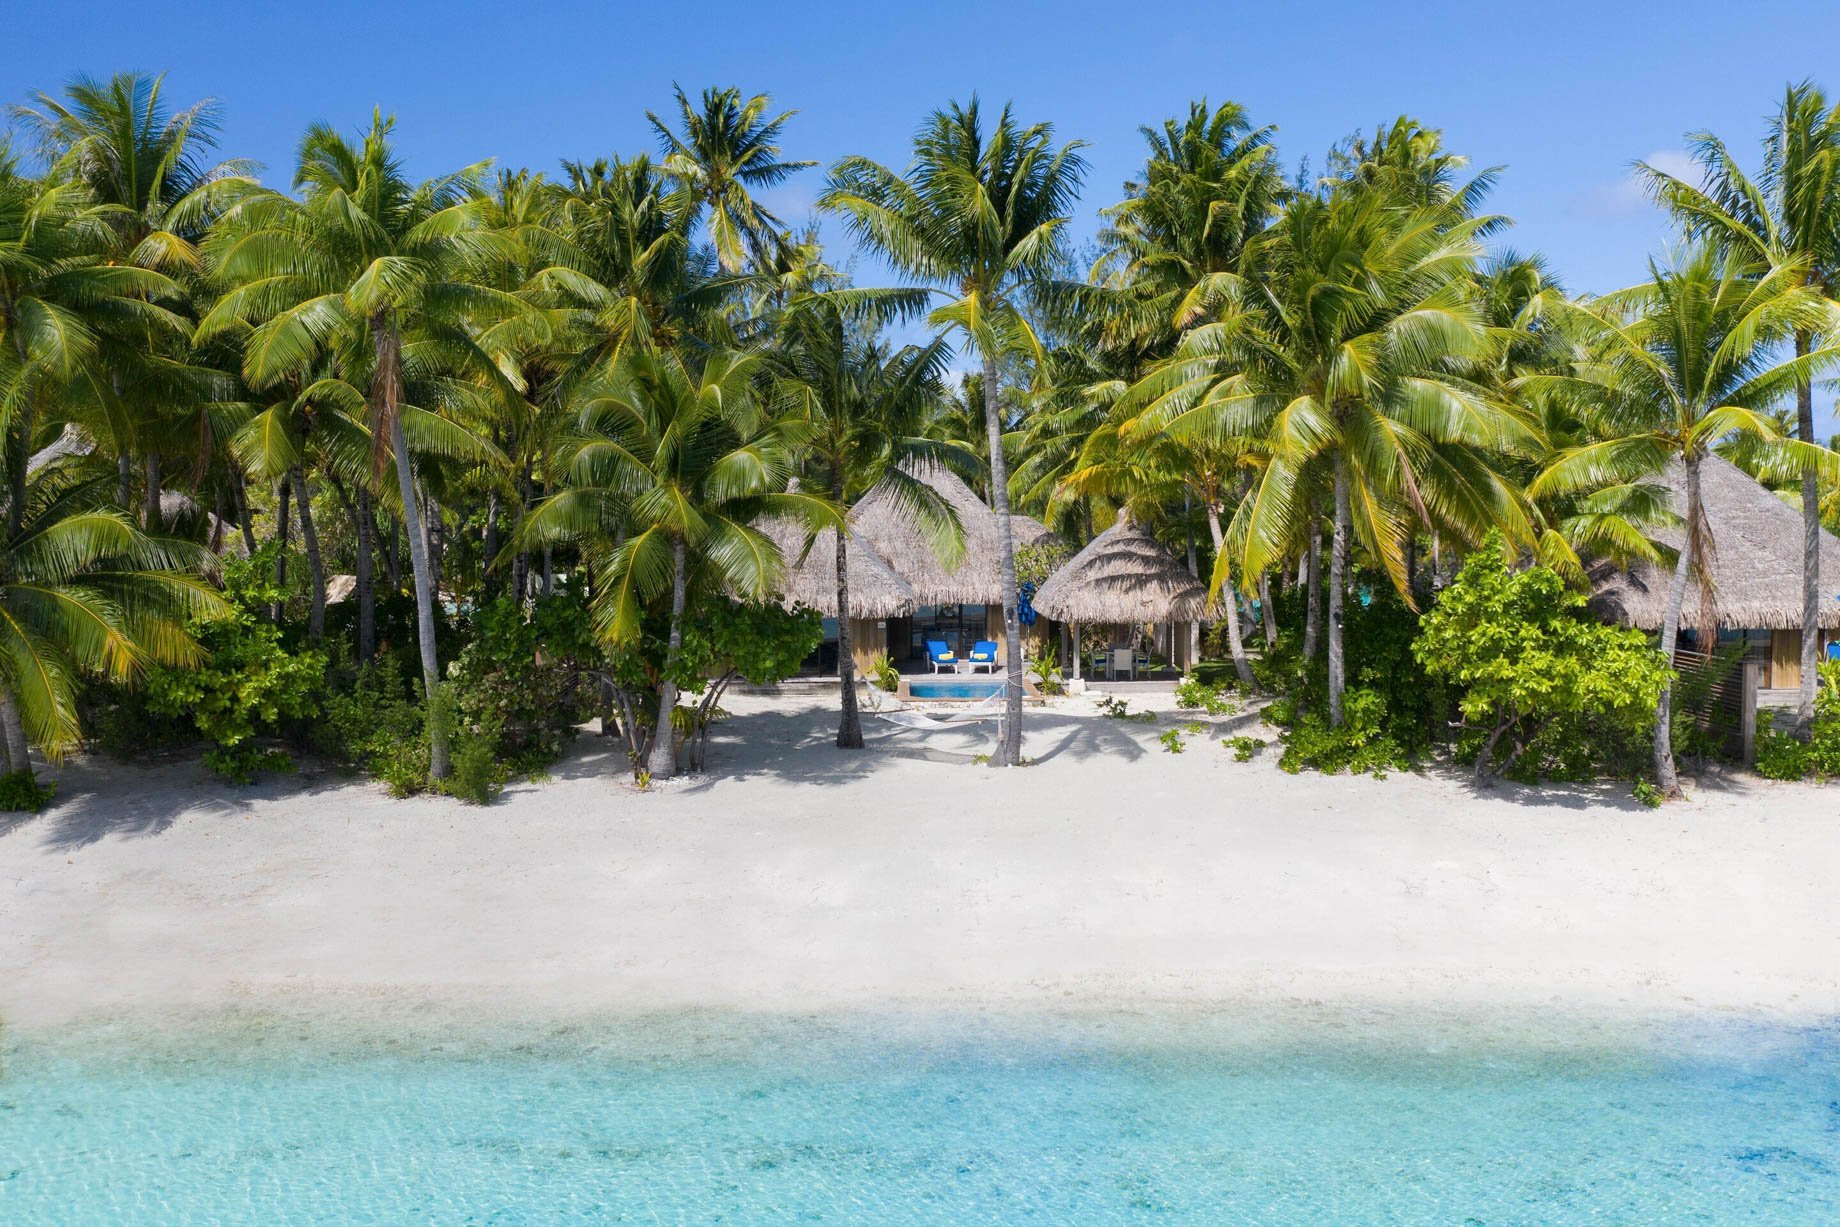 The St. Regis Bora Bora Resort - Bora Bora, French Polynesia - Beach Front Suite Villa With Pool Exterior View